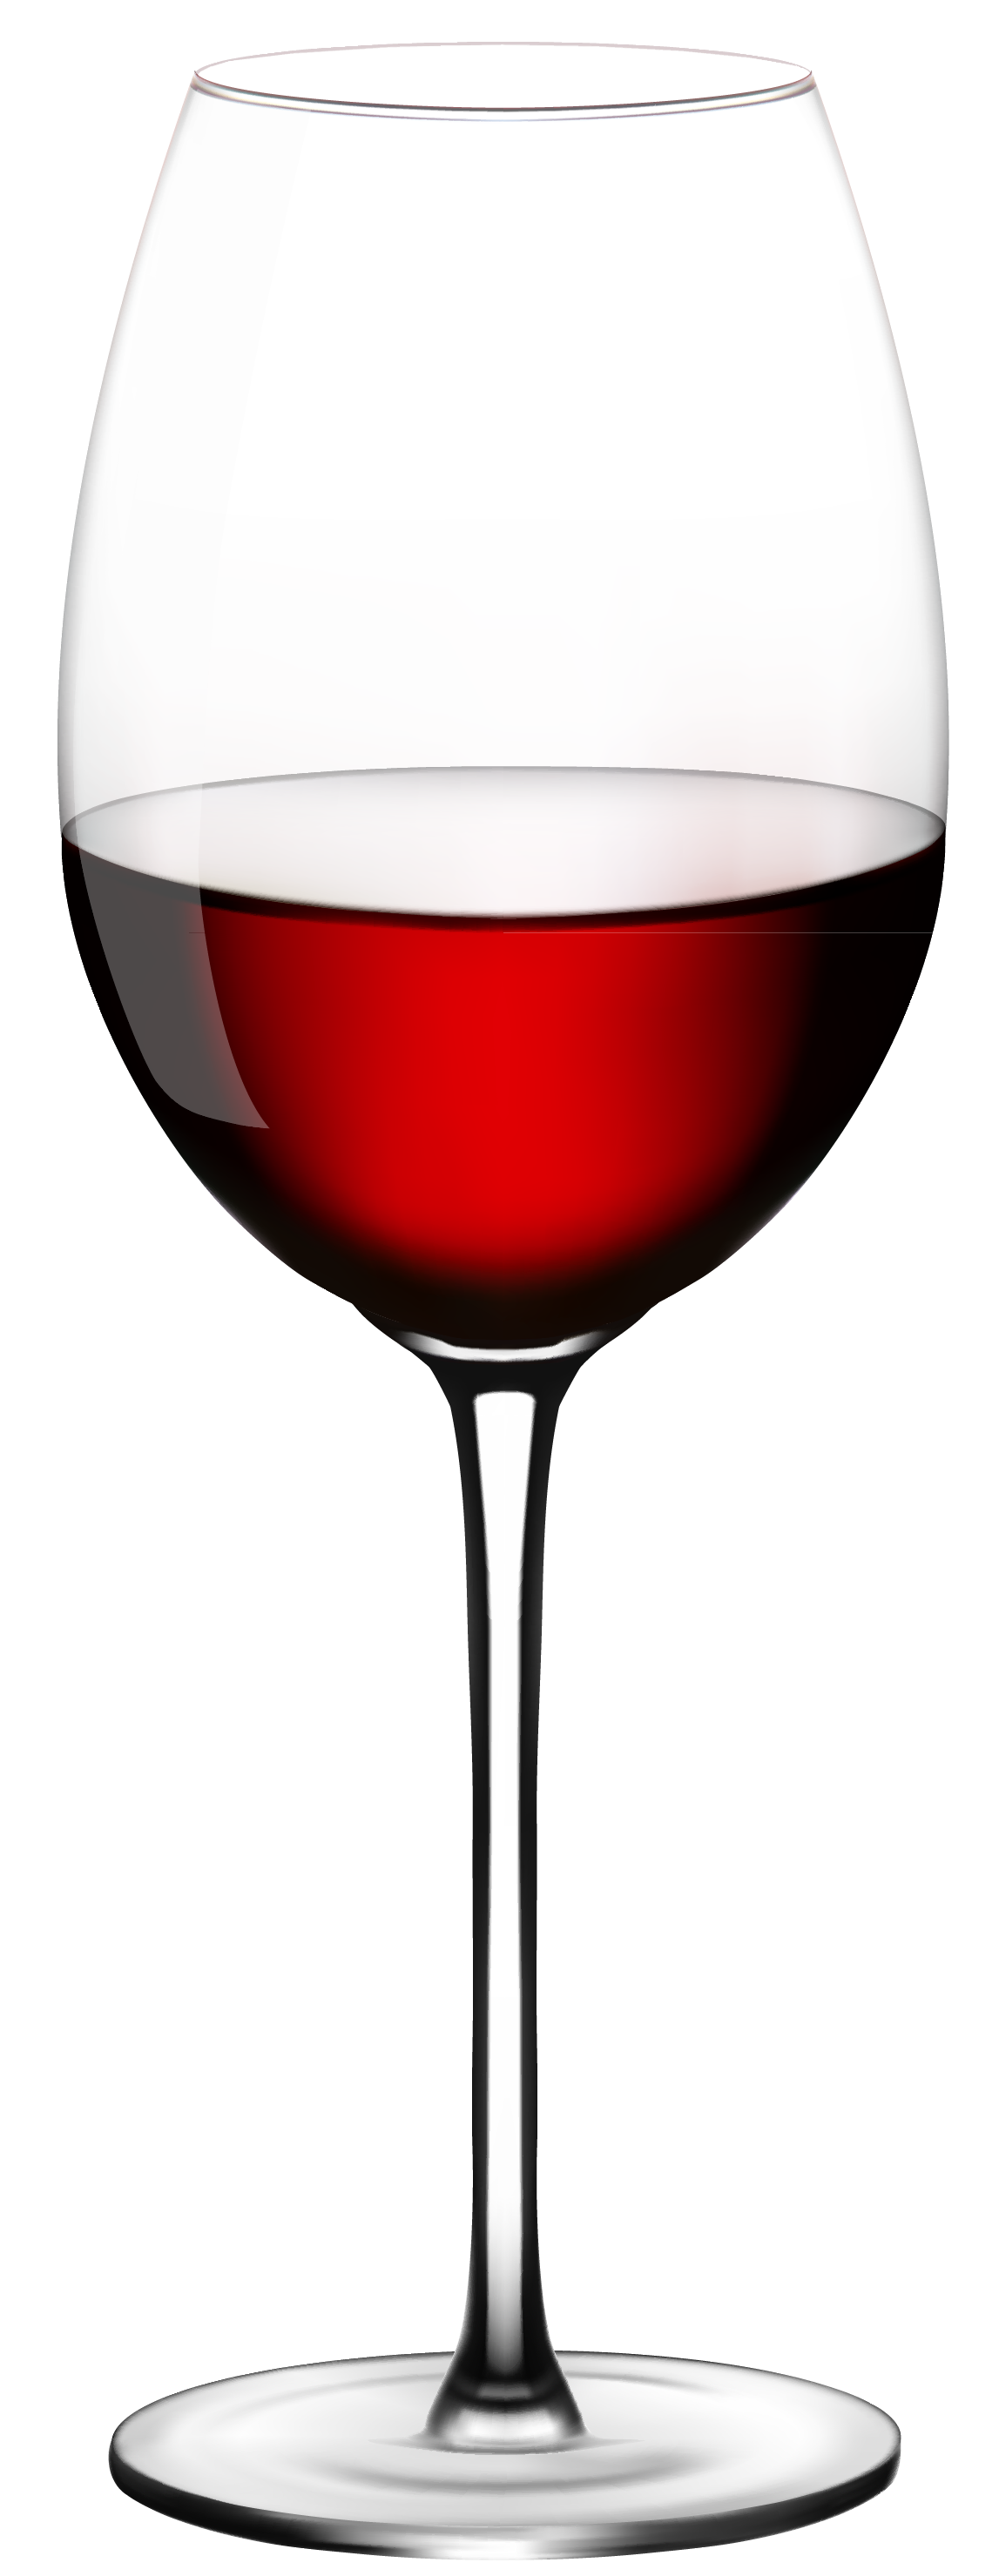 free vector wine glass clip art - photo #9